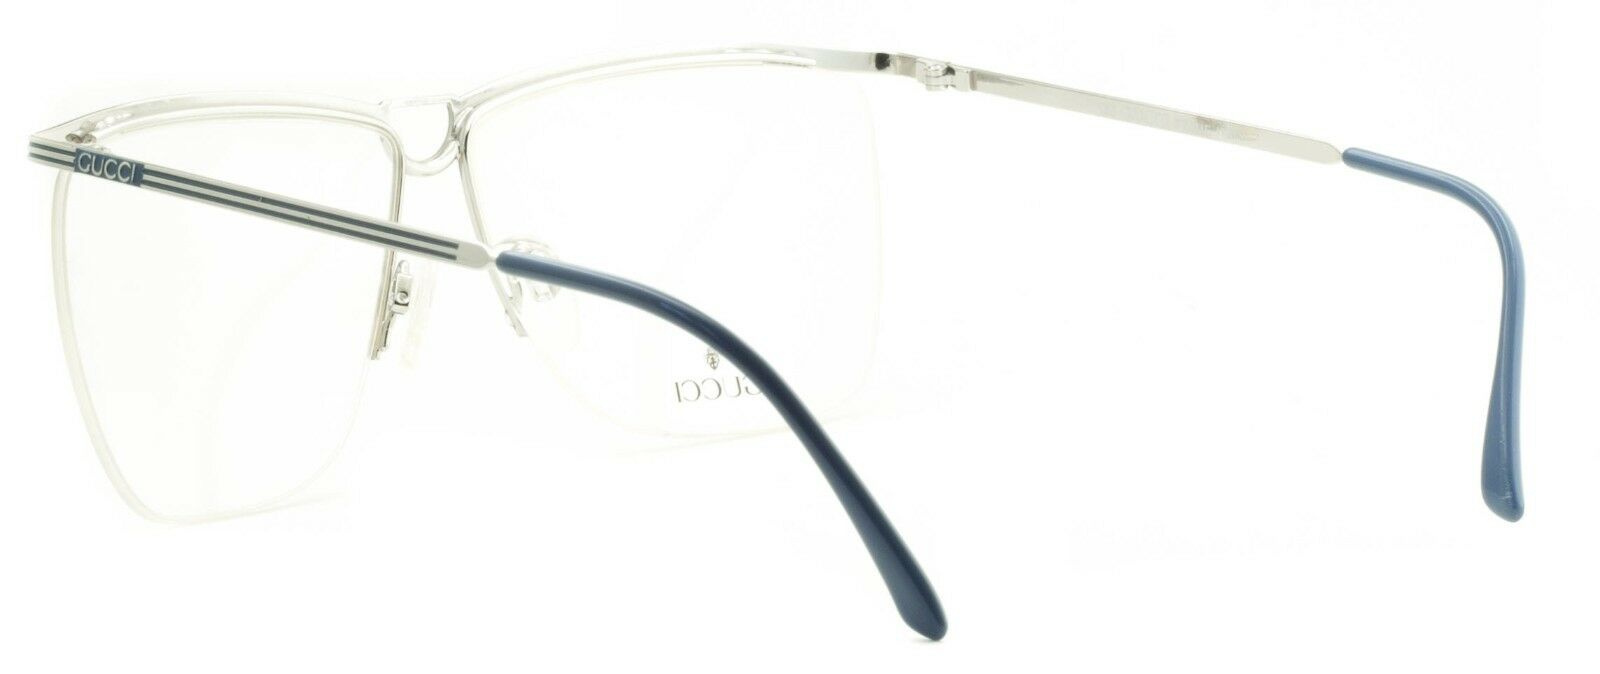 GUCCI GG 2241 80P Eyewear FRAMES NEW Glasses RX Optical Eyeglasses ITALY - BNIB